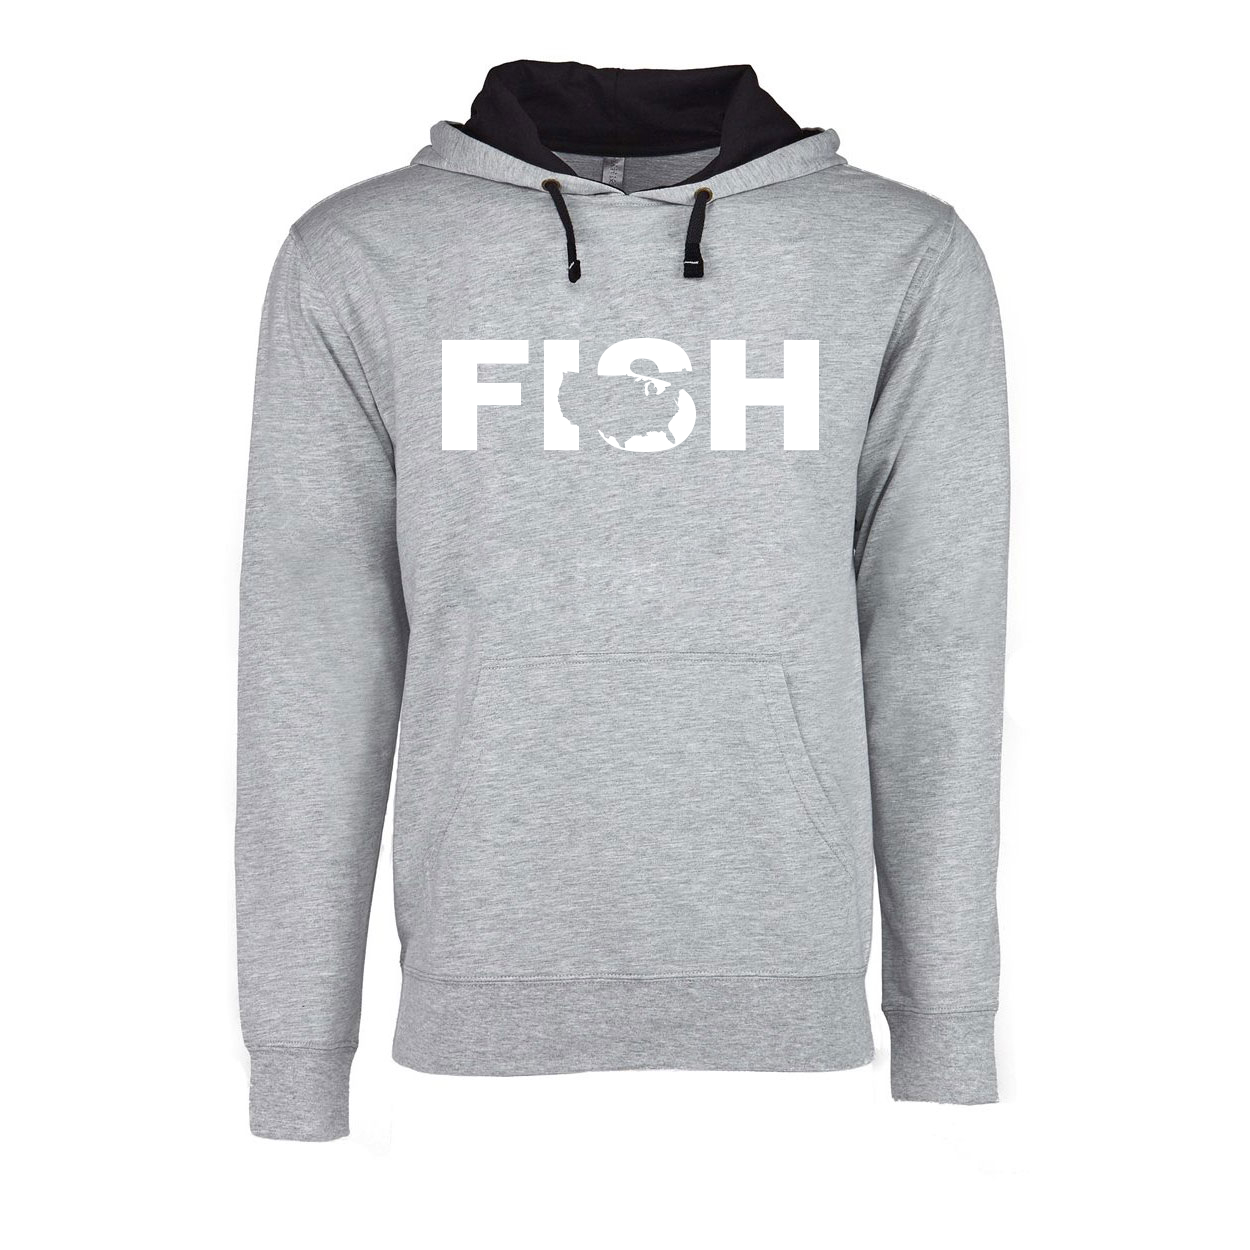 Fish United States Classic Lightweight Sweatshirt Heather Gray/Black (White Logo)